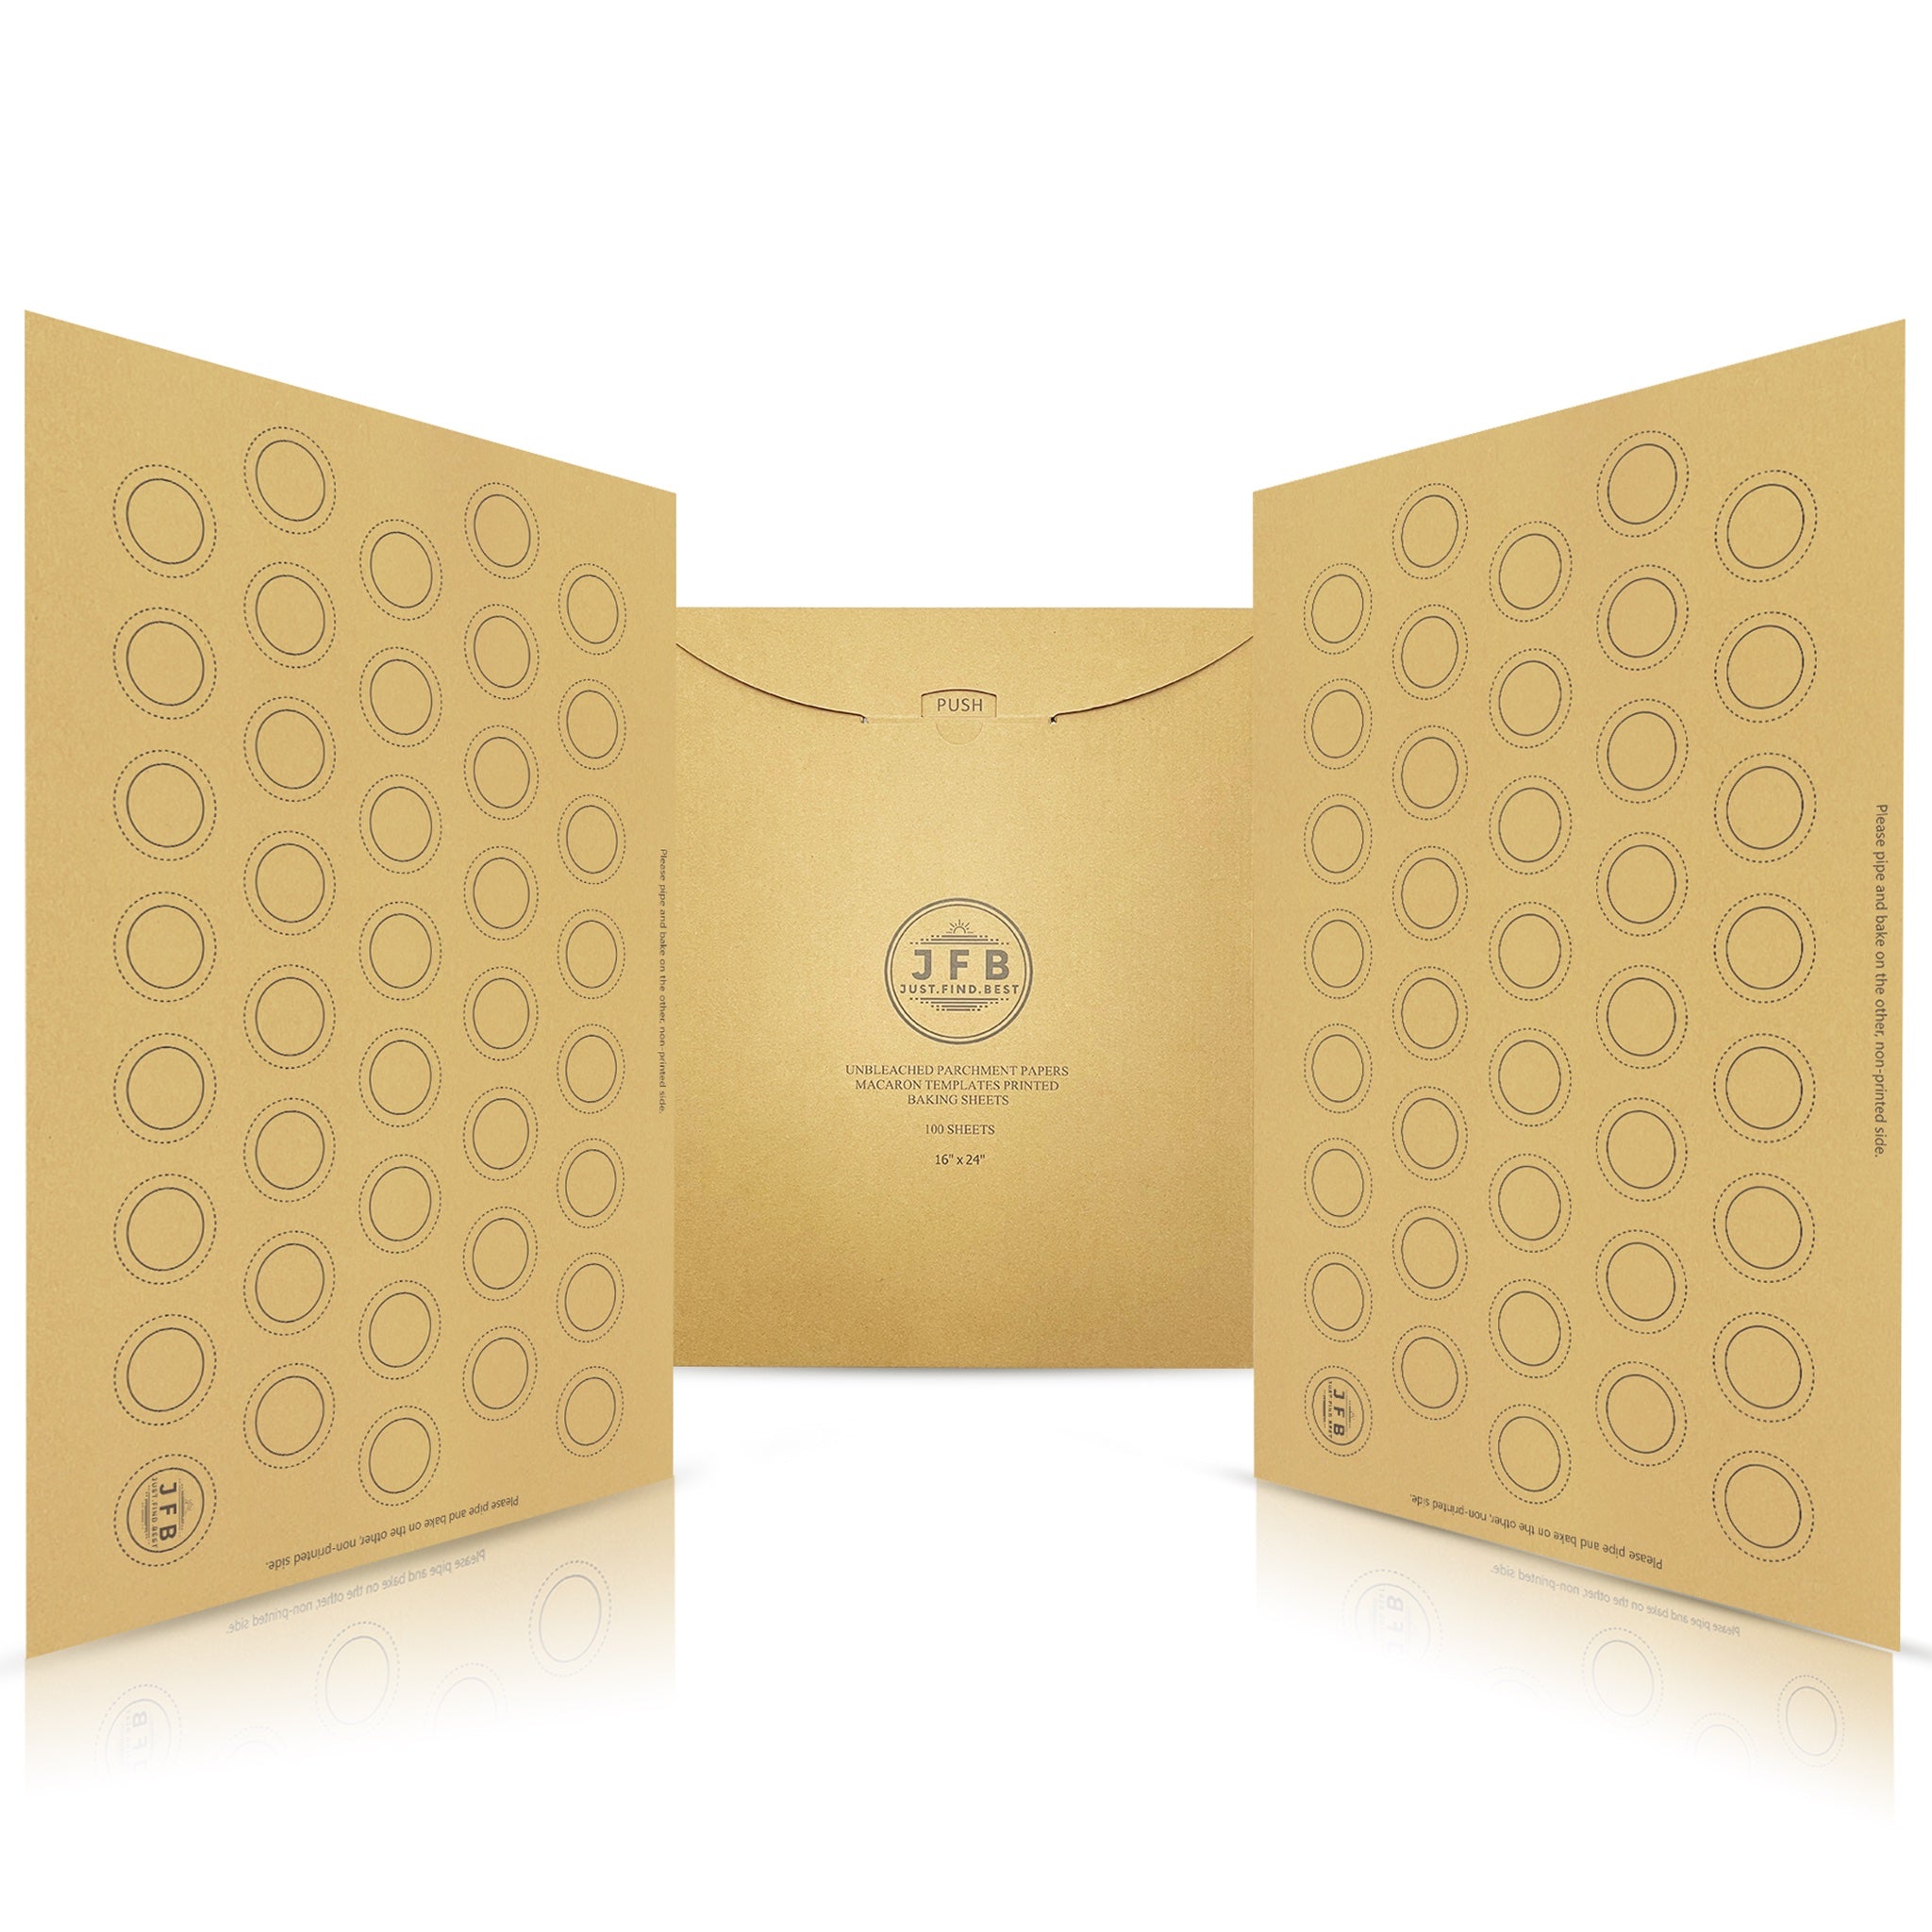 Macaron Circles Template - Parchment Paper | Just.Find.Best